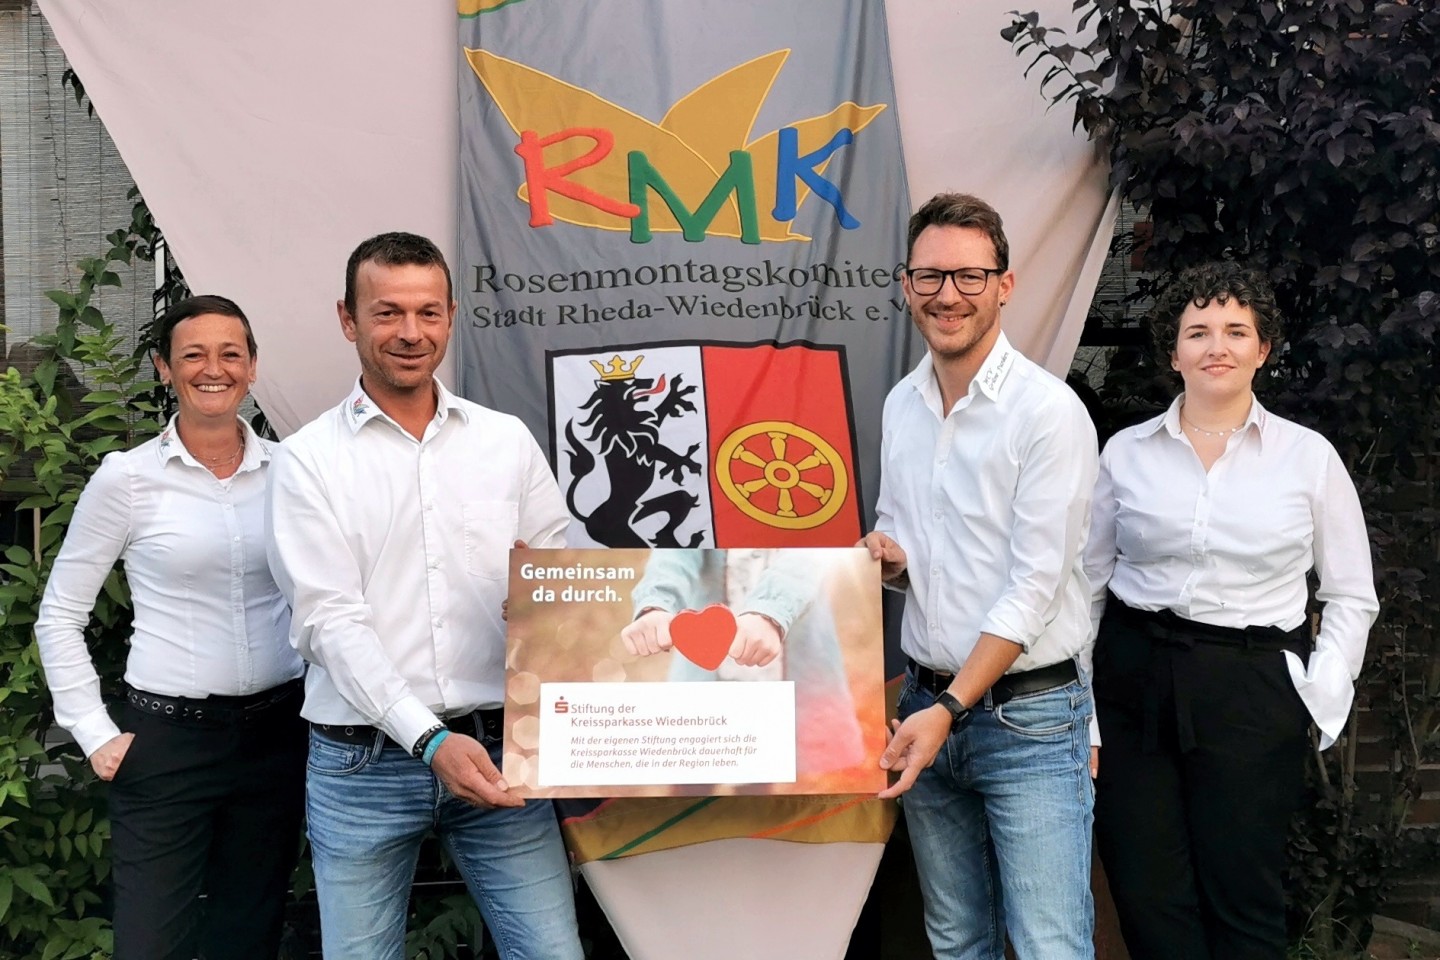 Rosenmontagskomitee Stadt Rheda-Wiedenbrück e.V.